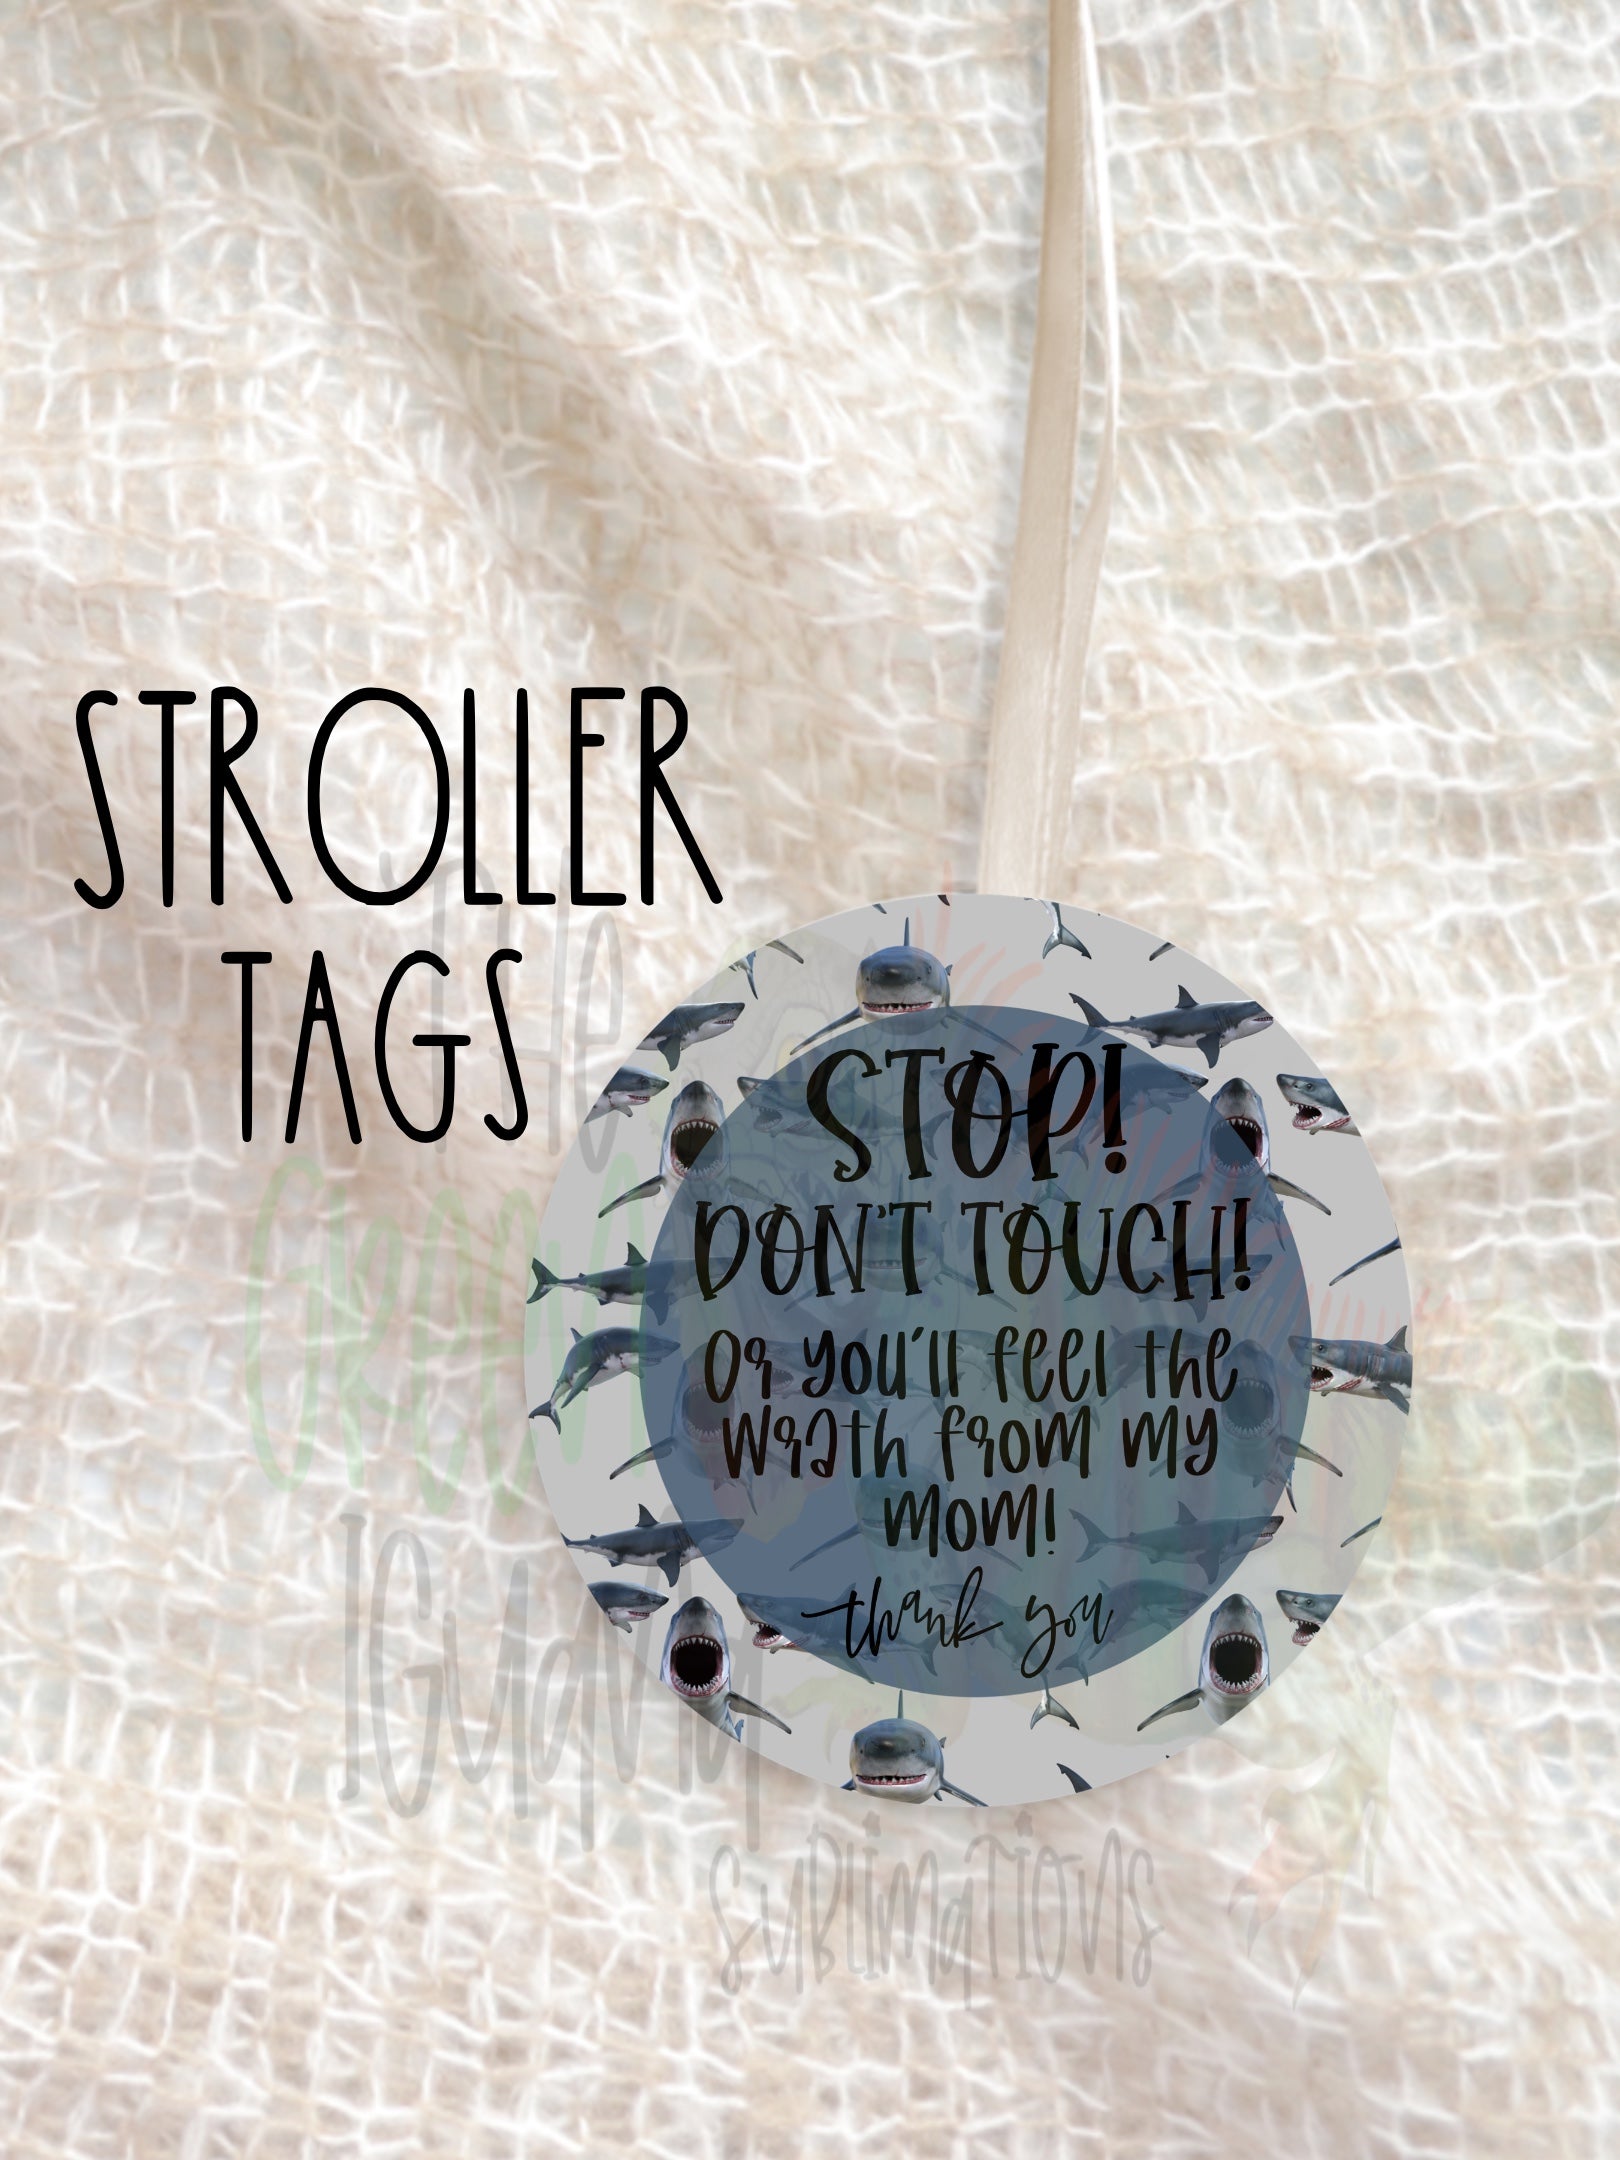 Wrath from my mom - Stroller tag